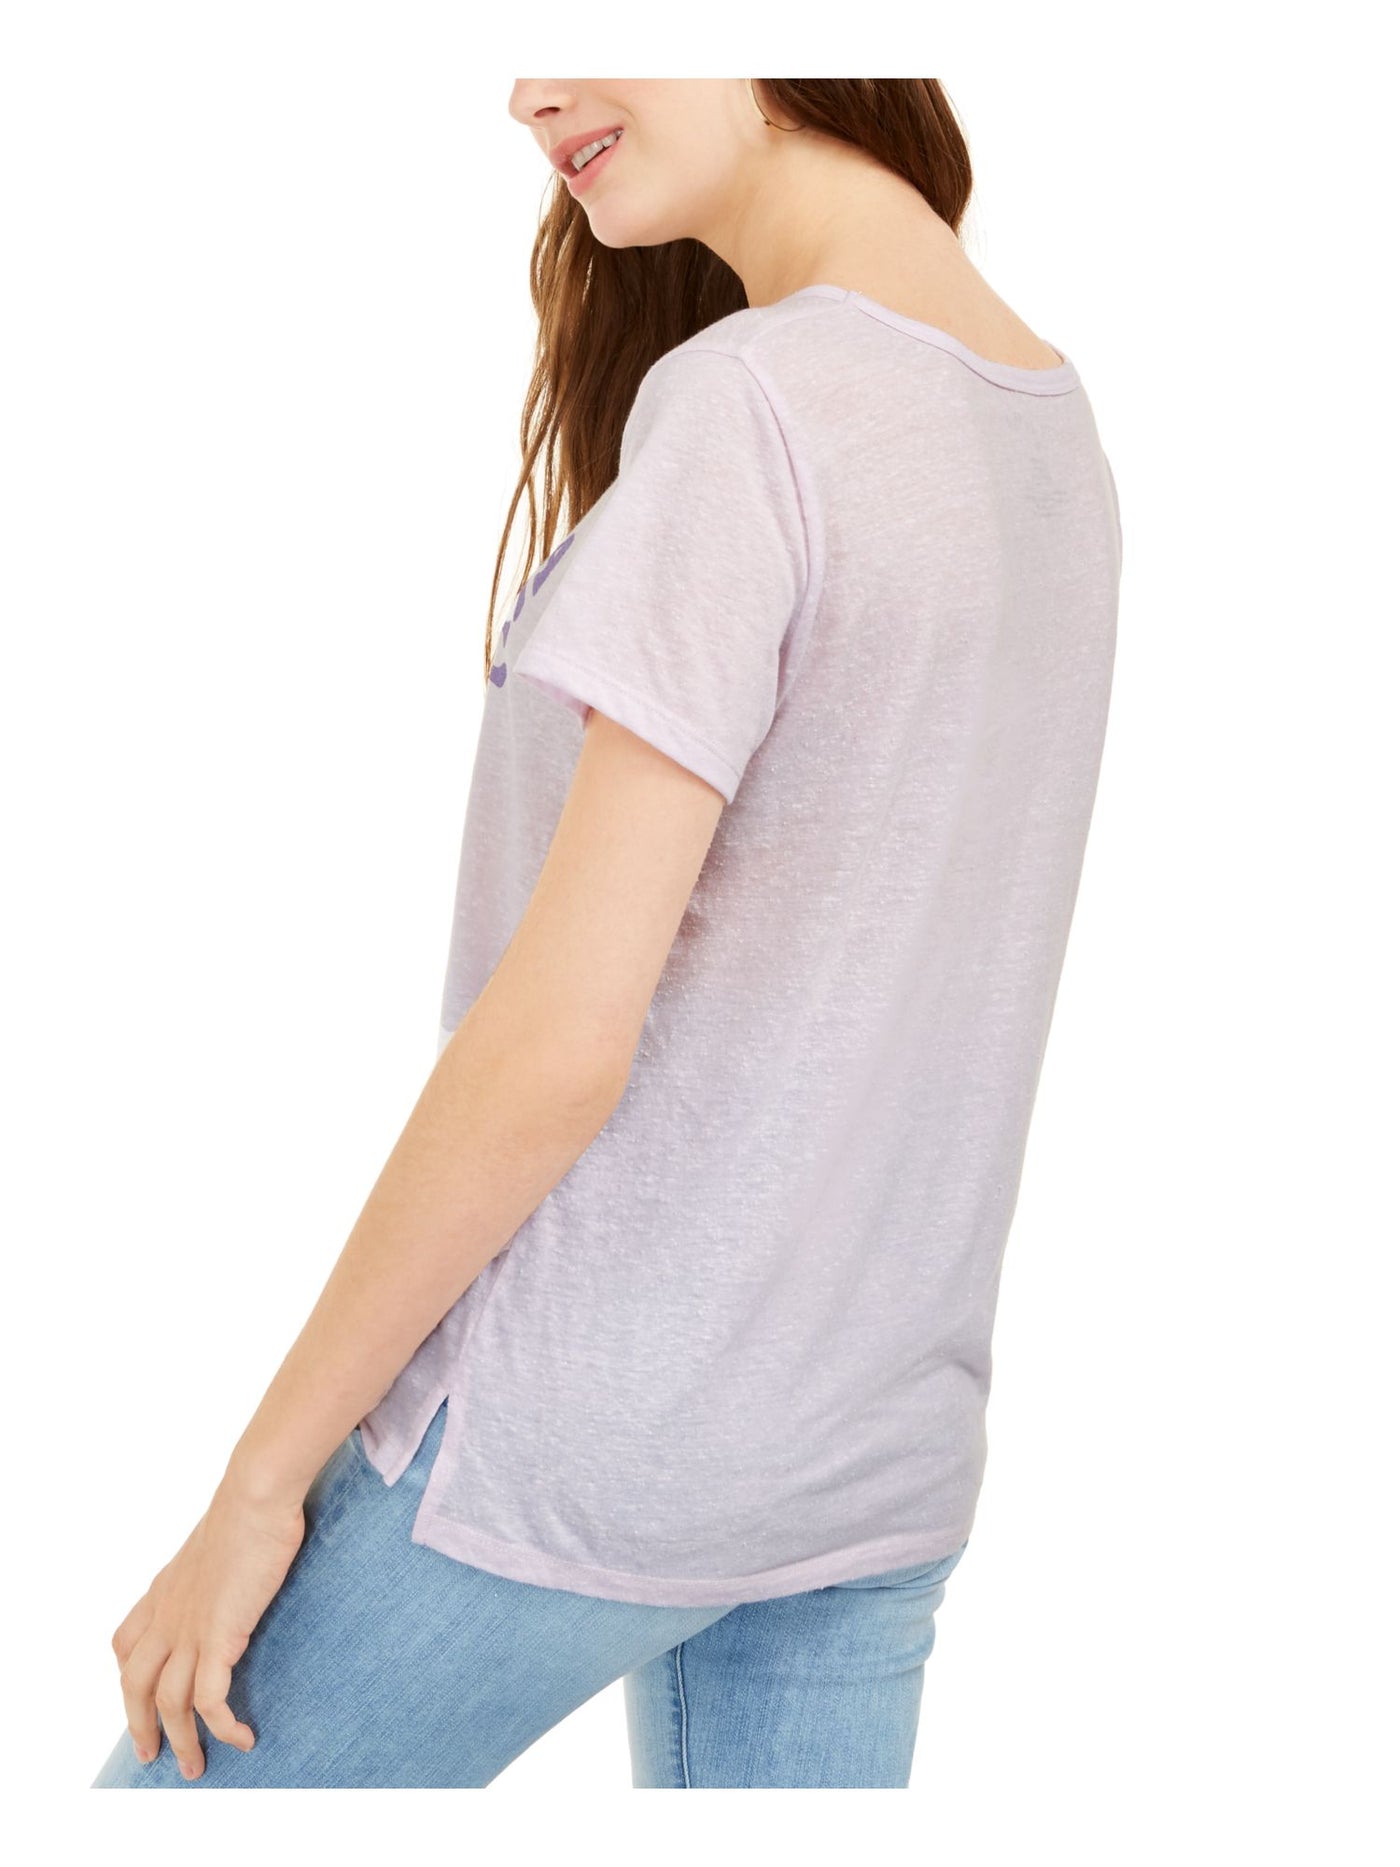 LOVE TRIBE Womens Purple Printed Short Sleeve Jewel Neck T-Shirt Juniors M